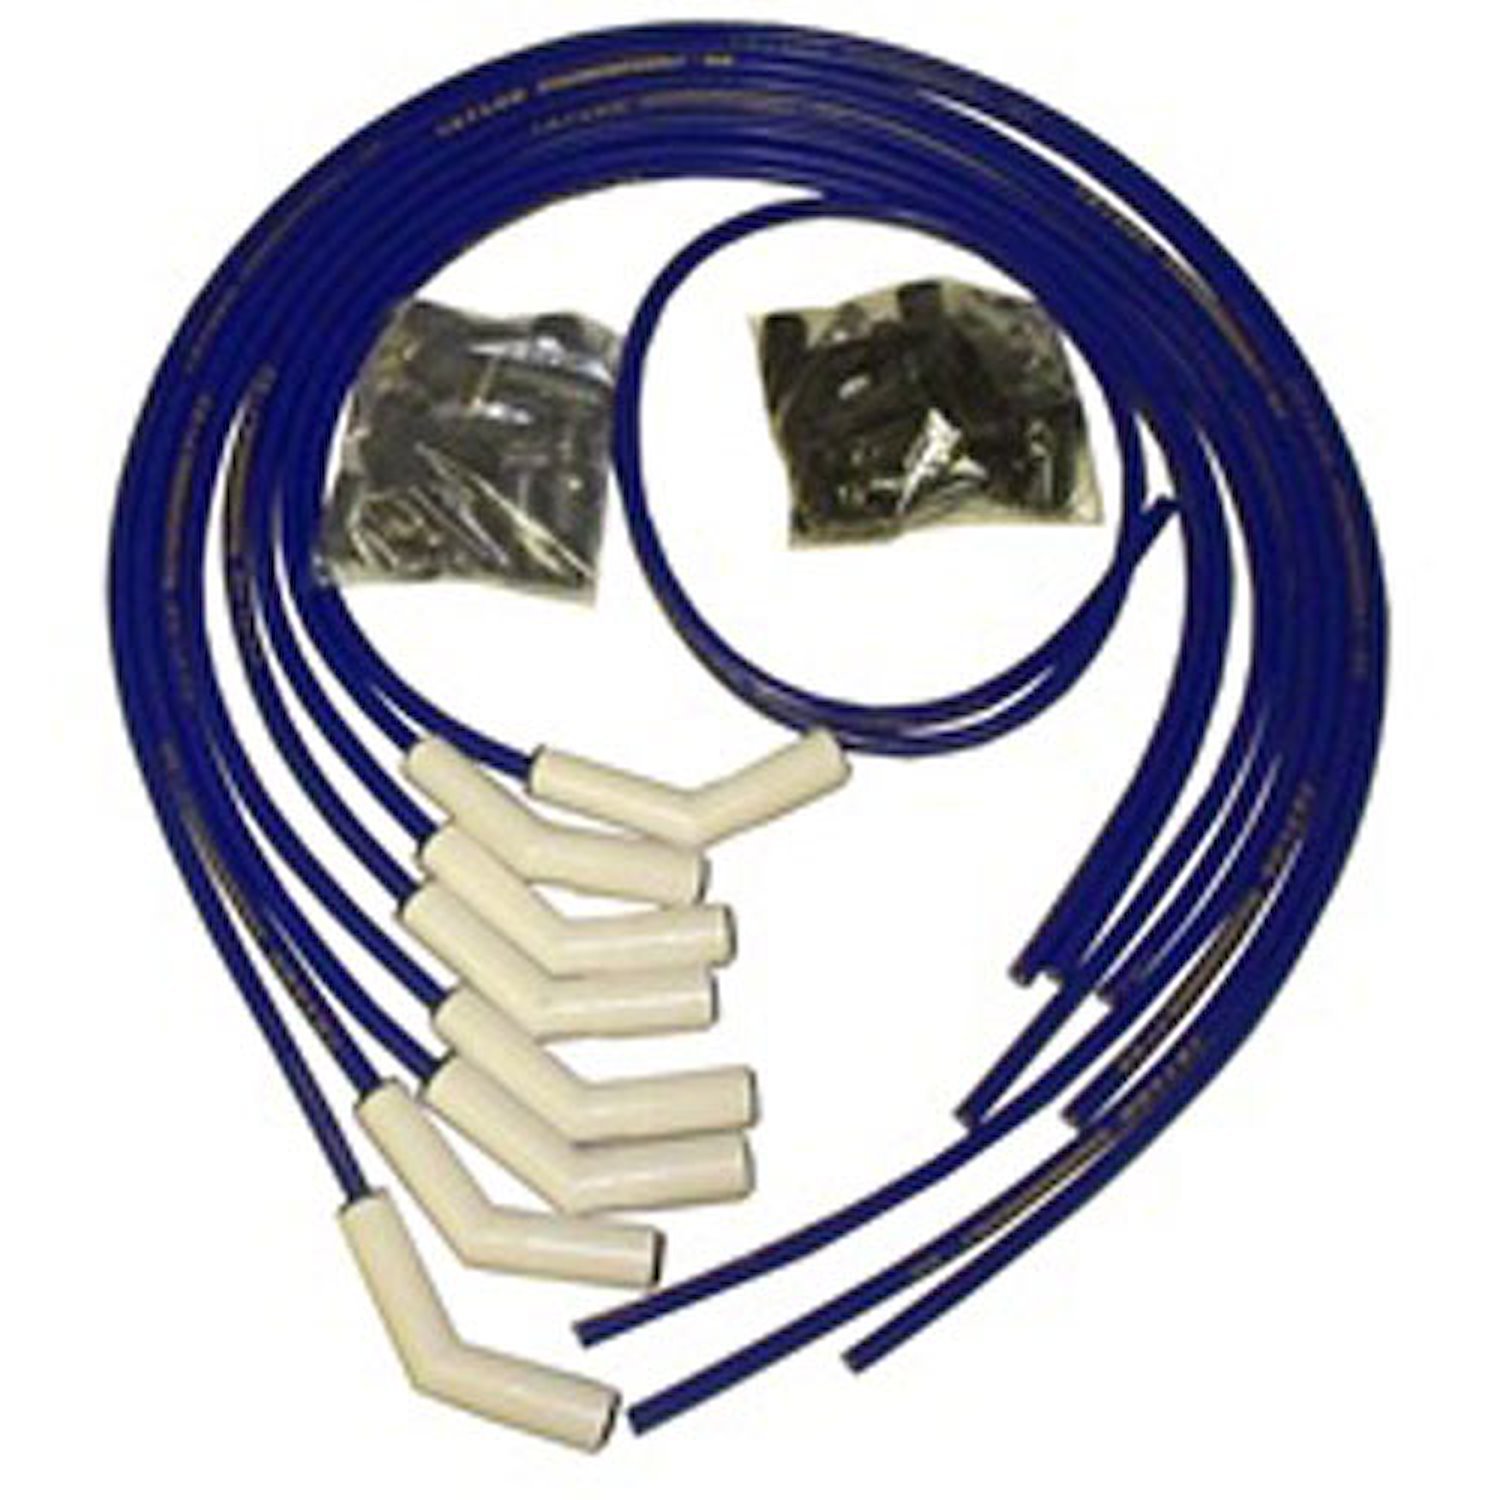 ThunderVolt 8.2 mm. Ignition Wire Set Ceramic Boot Universal Wire Set 135 deg. Blue